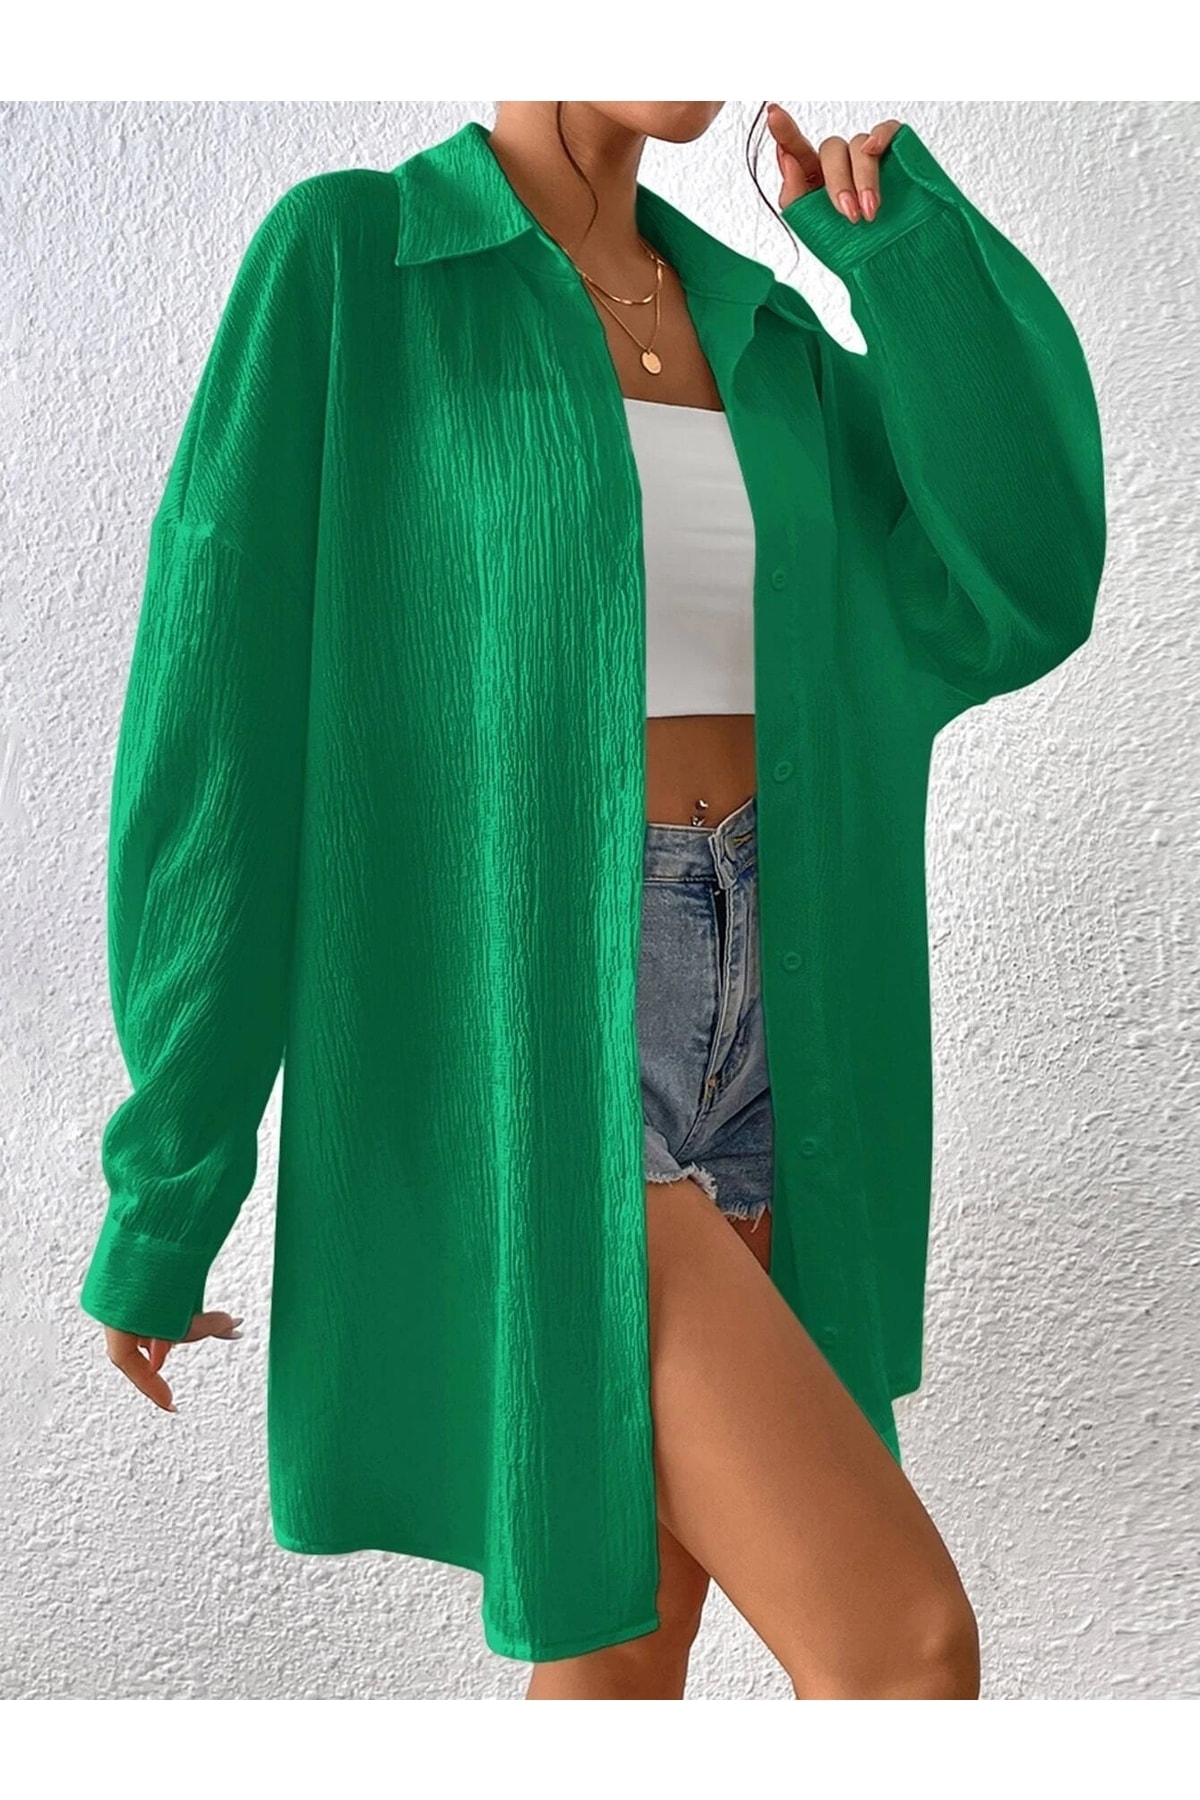 Know Women's Green Oversized Long Shirt